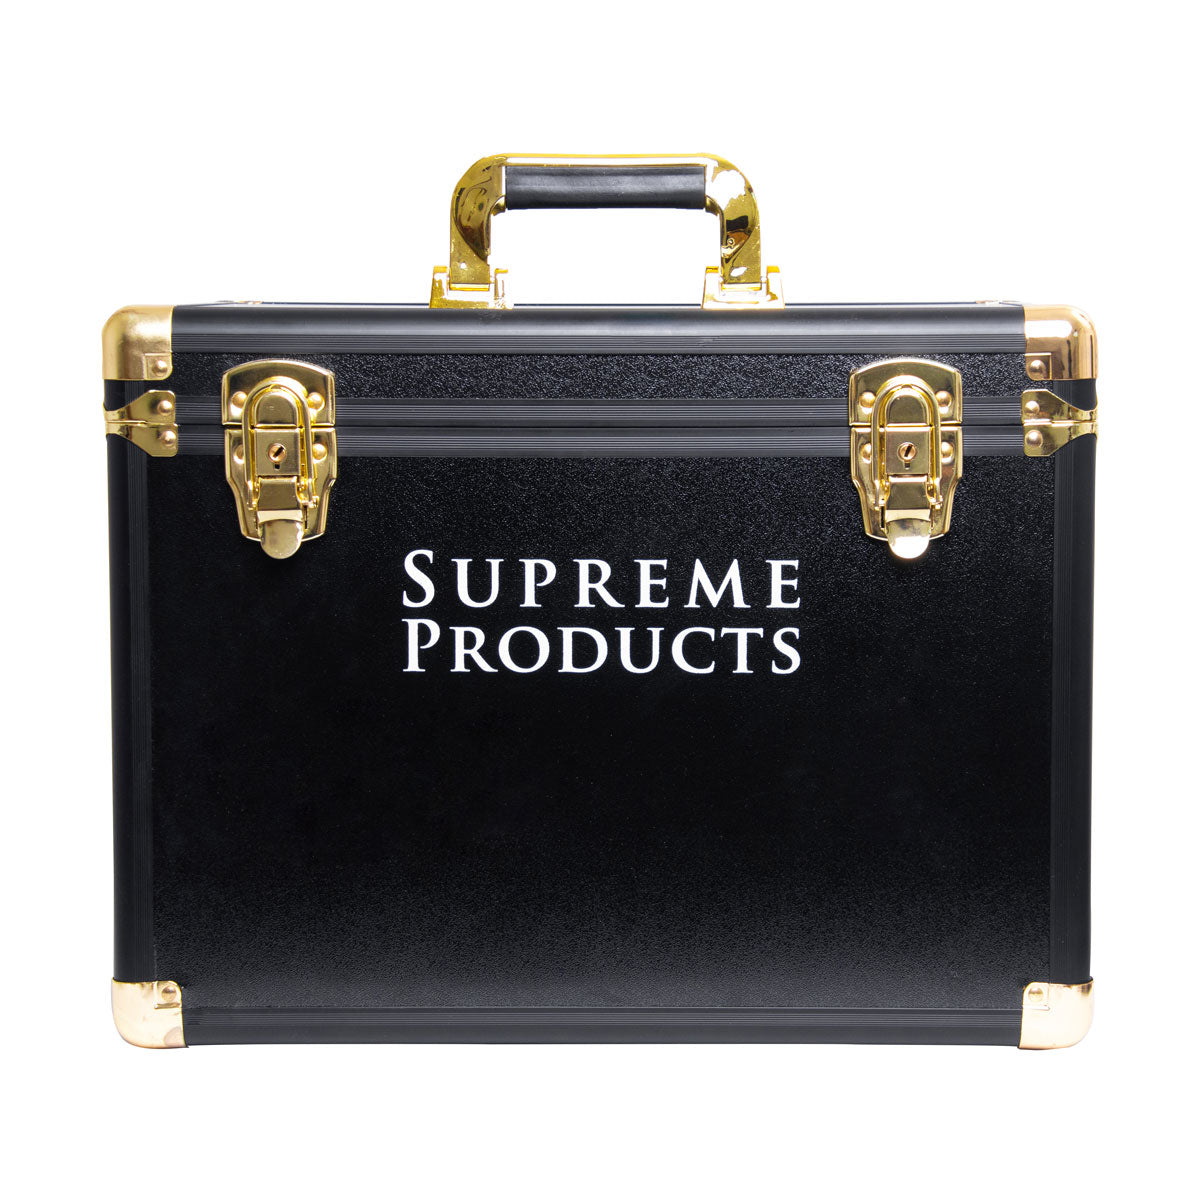 Supreme Products Pro Groom Hardshell Box